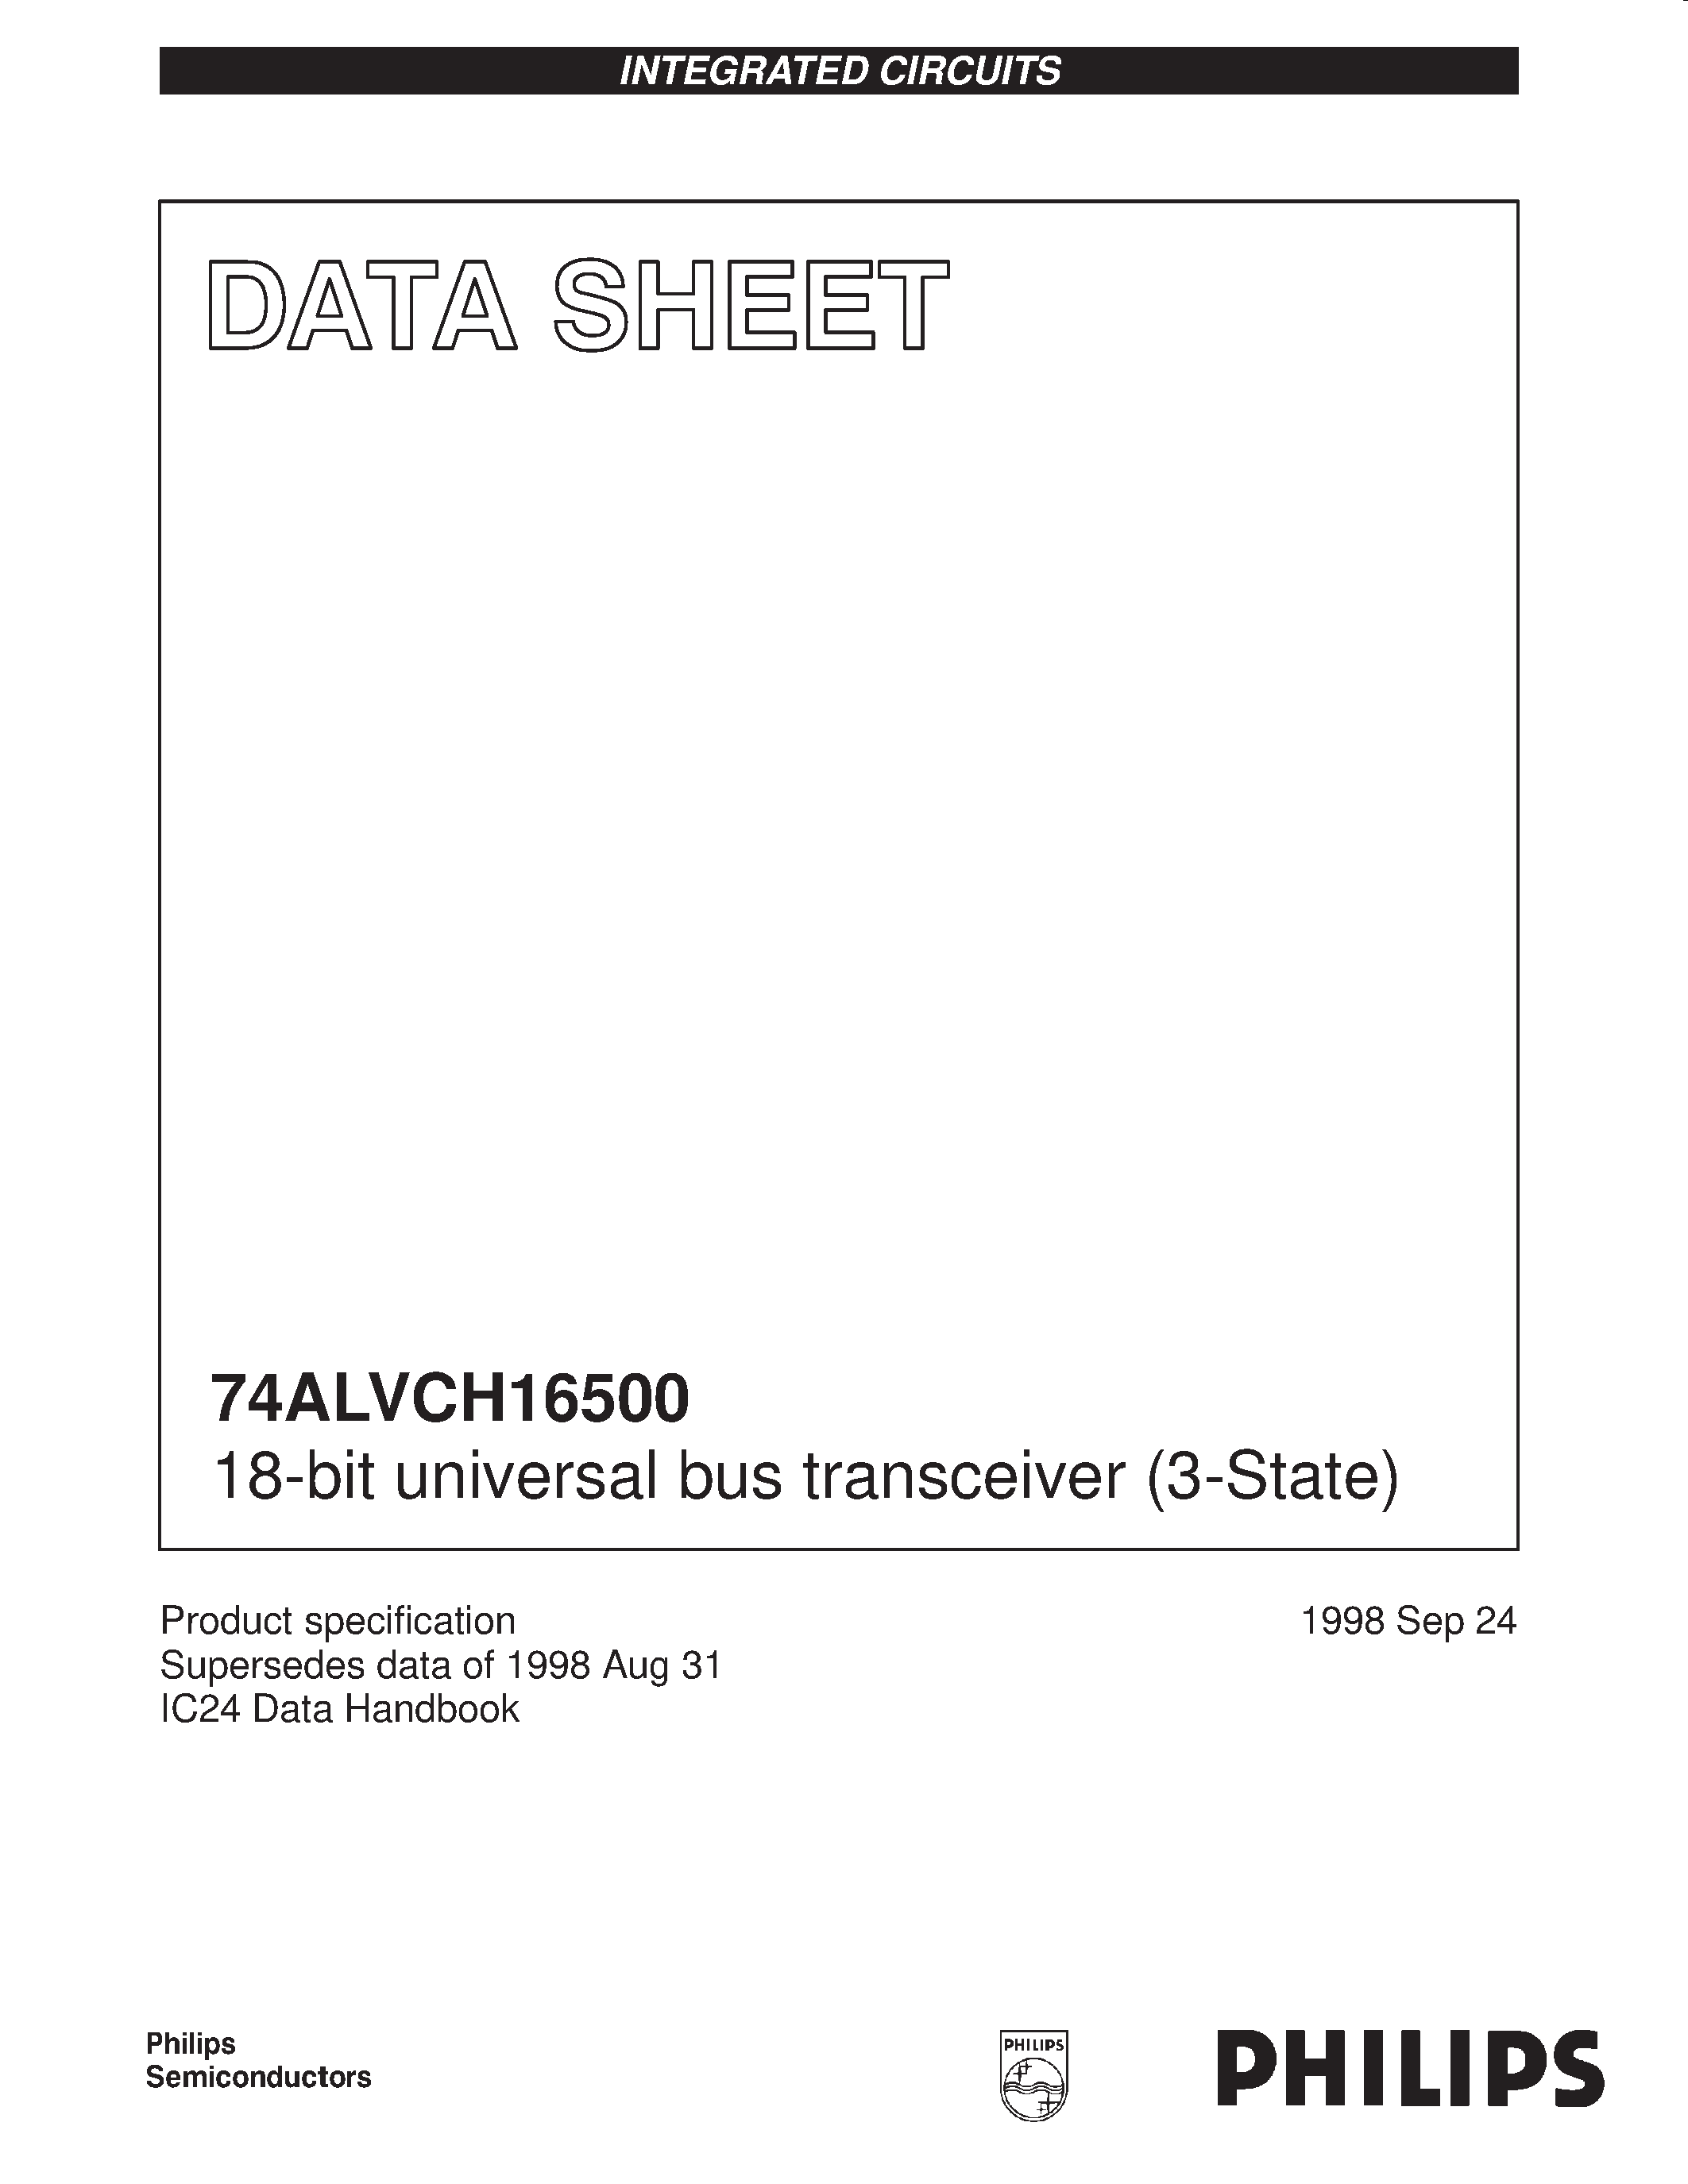 Datasheet 74ALVCH16500DGG - 18-bit universal bus transceiver 3-State page 1